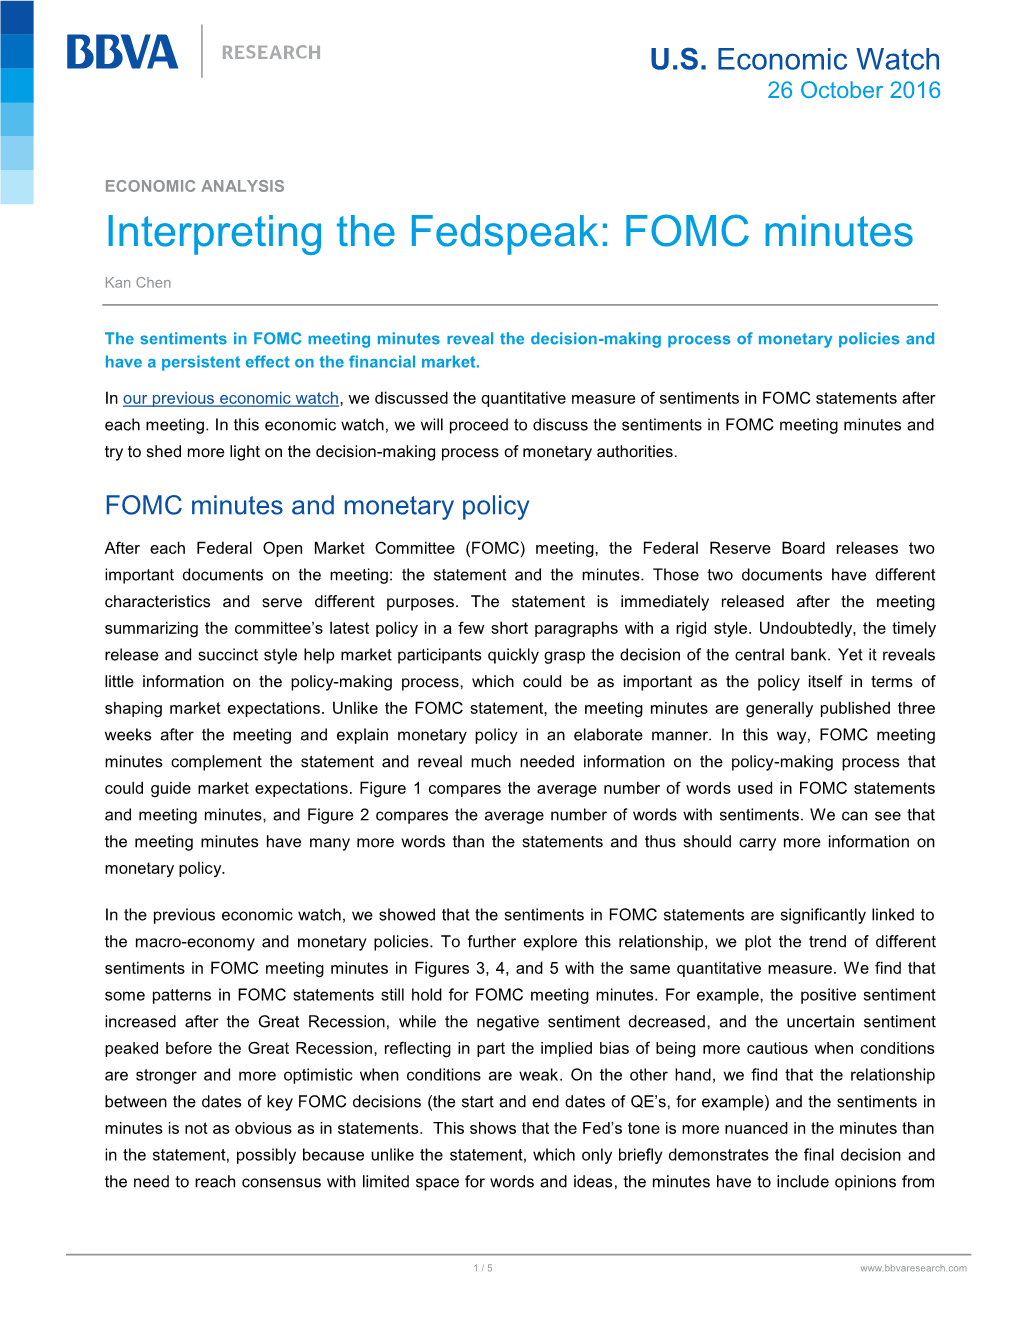 Interpreting the Fedspeak: FOMC Minutes